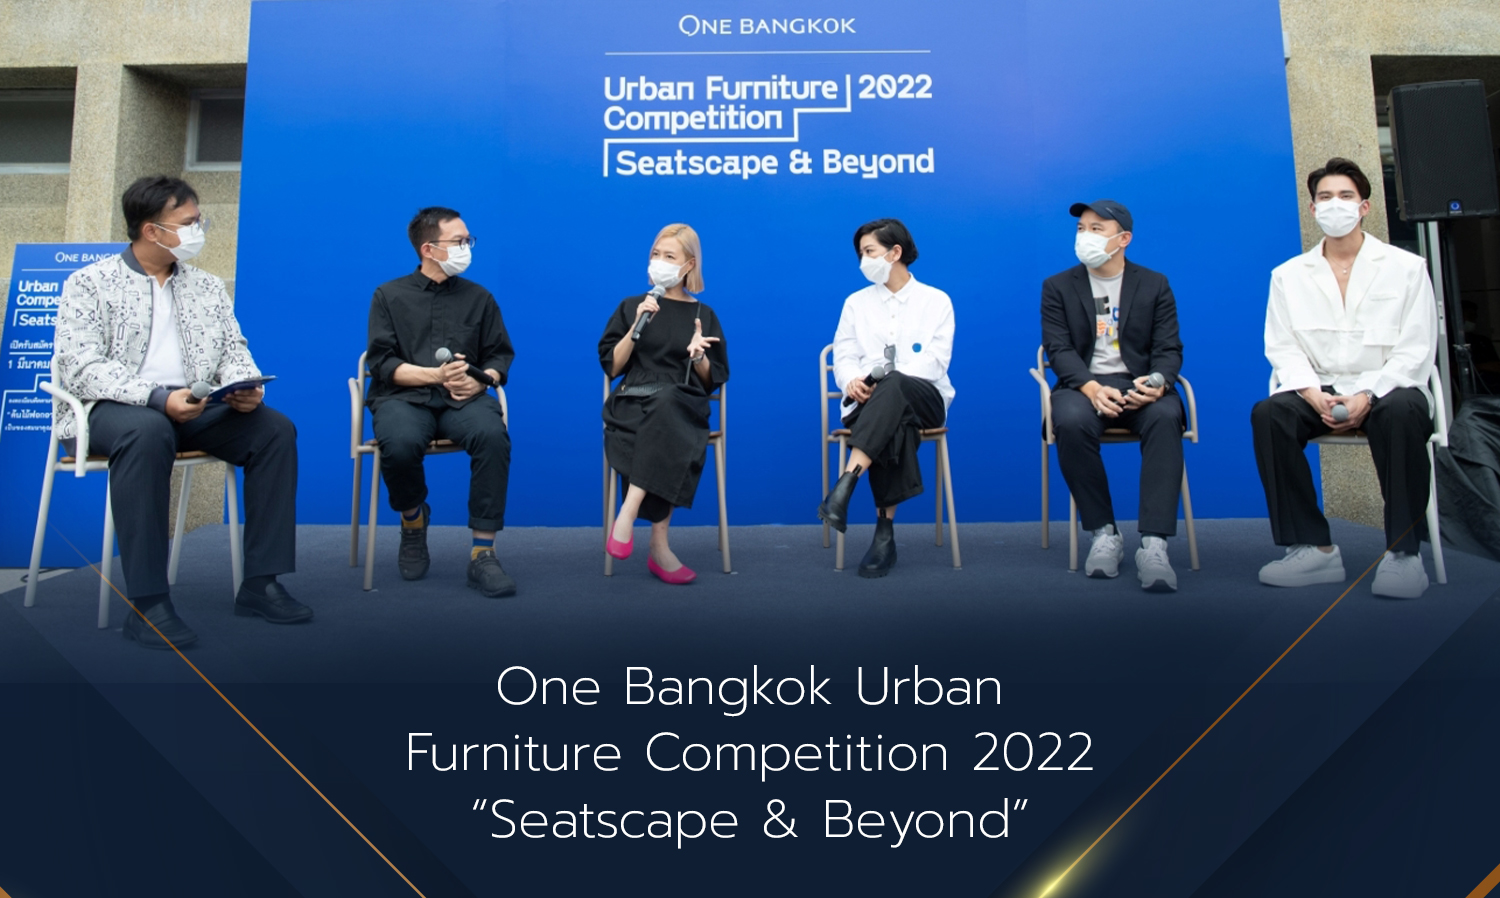 One Bangkok Urban Furniture Competition 2022 “Seatscape & Beyond”